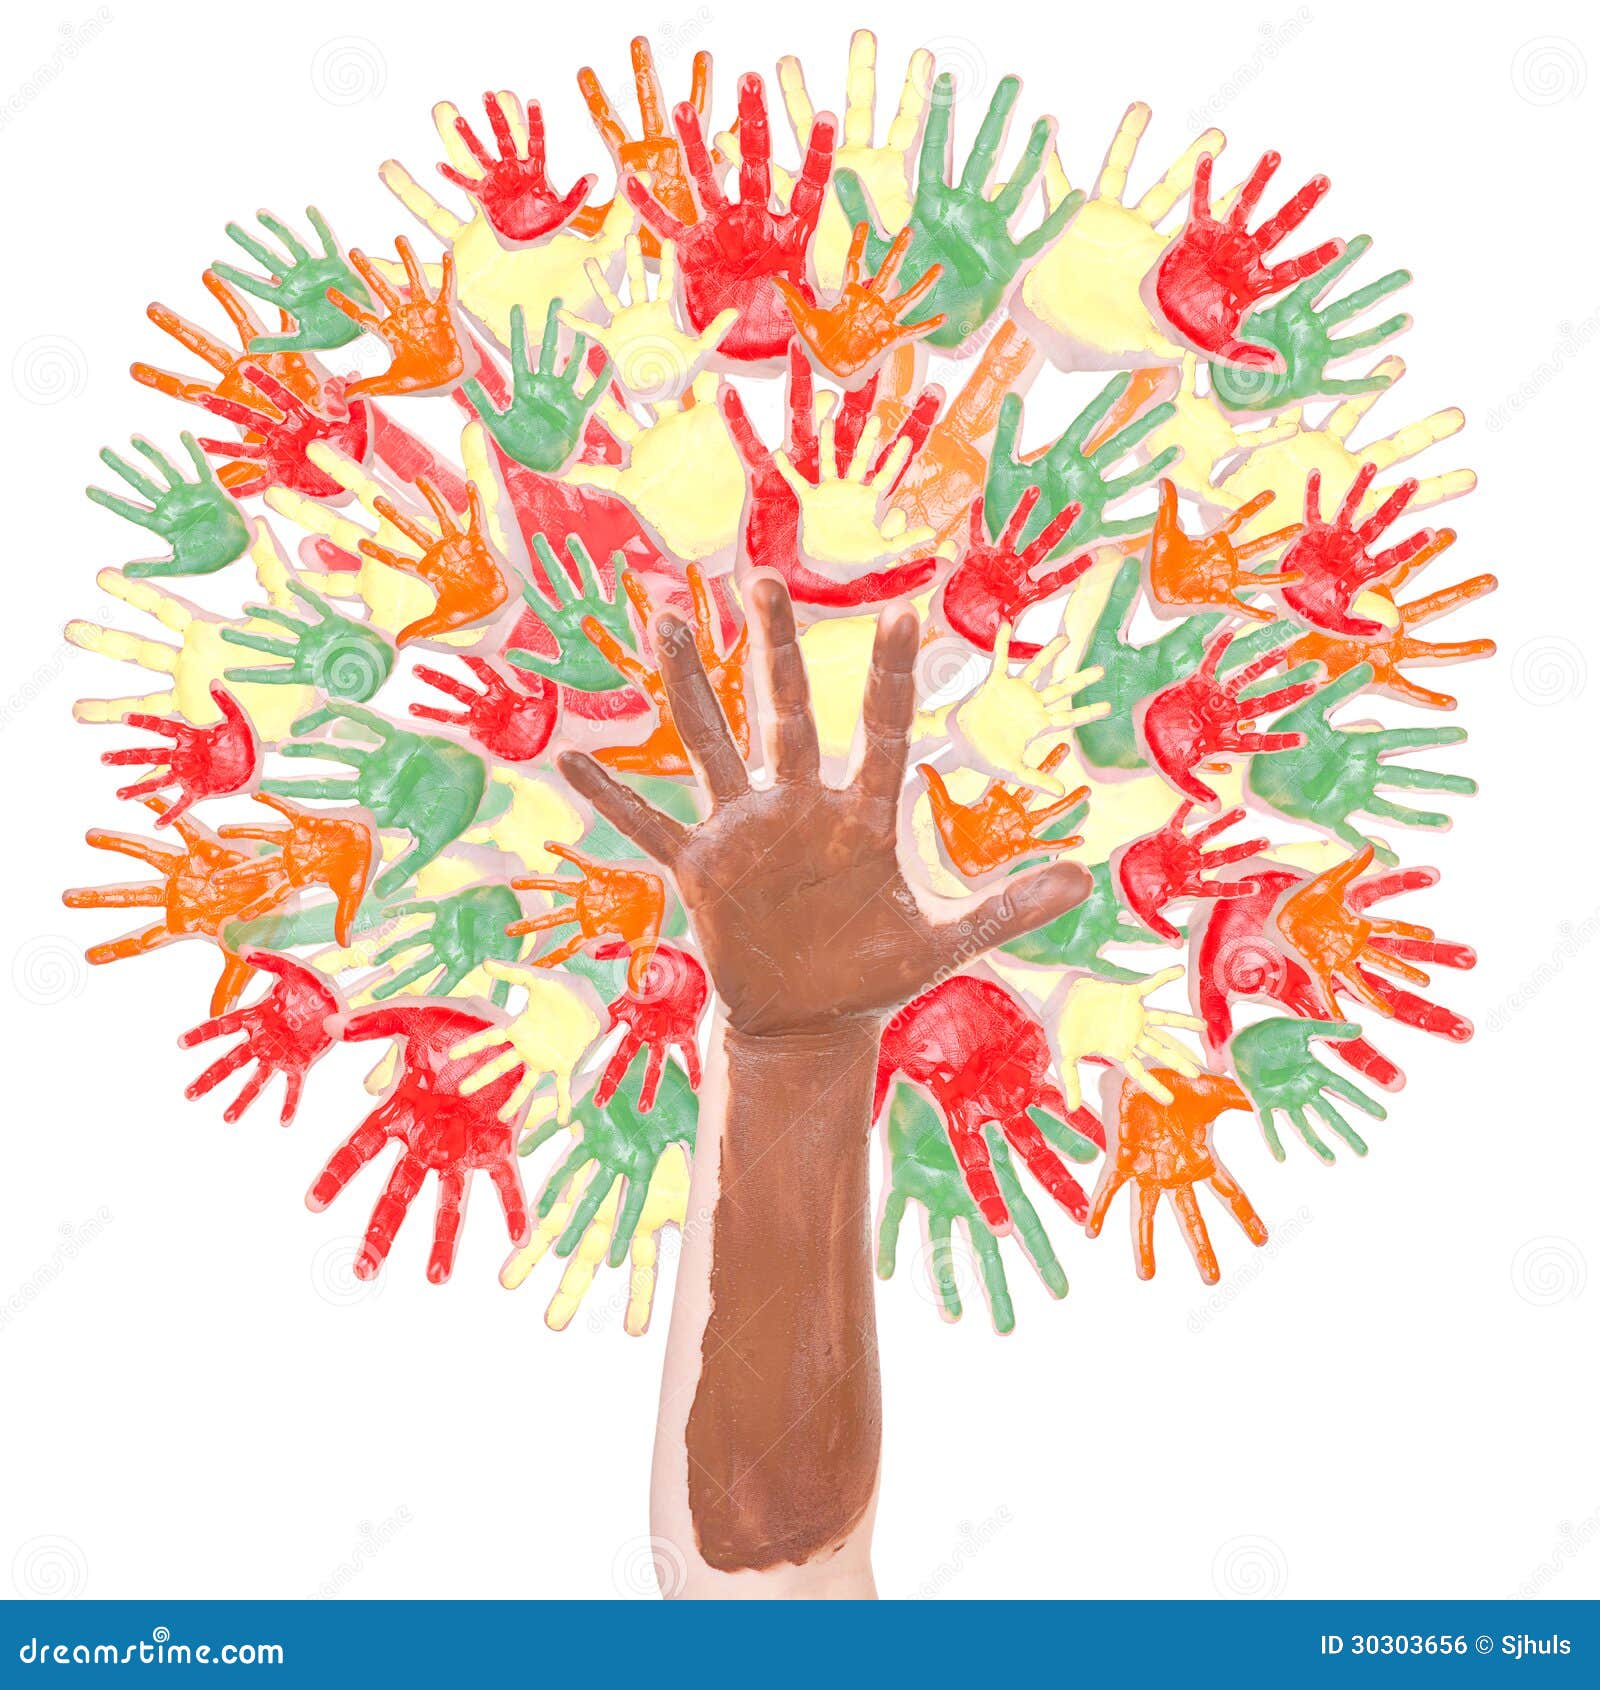 Autumn tree made of hands stock illustration. Illustration